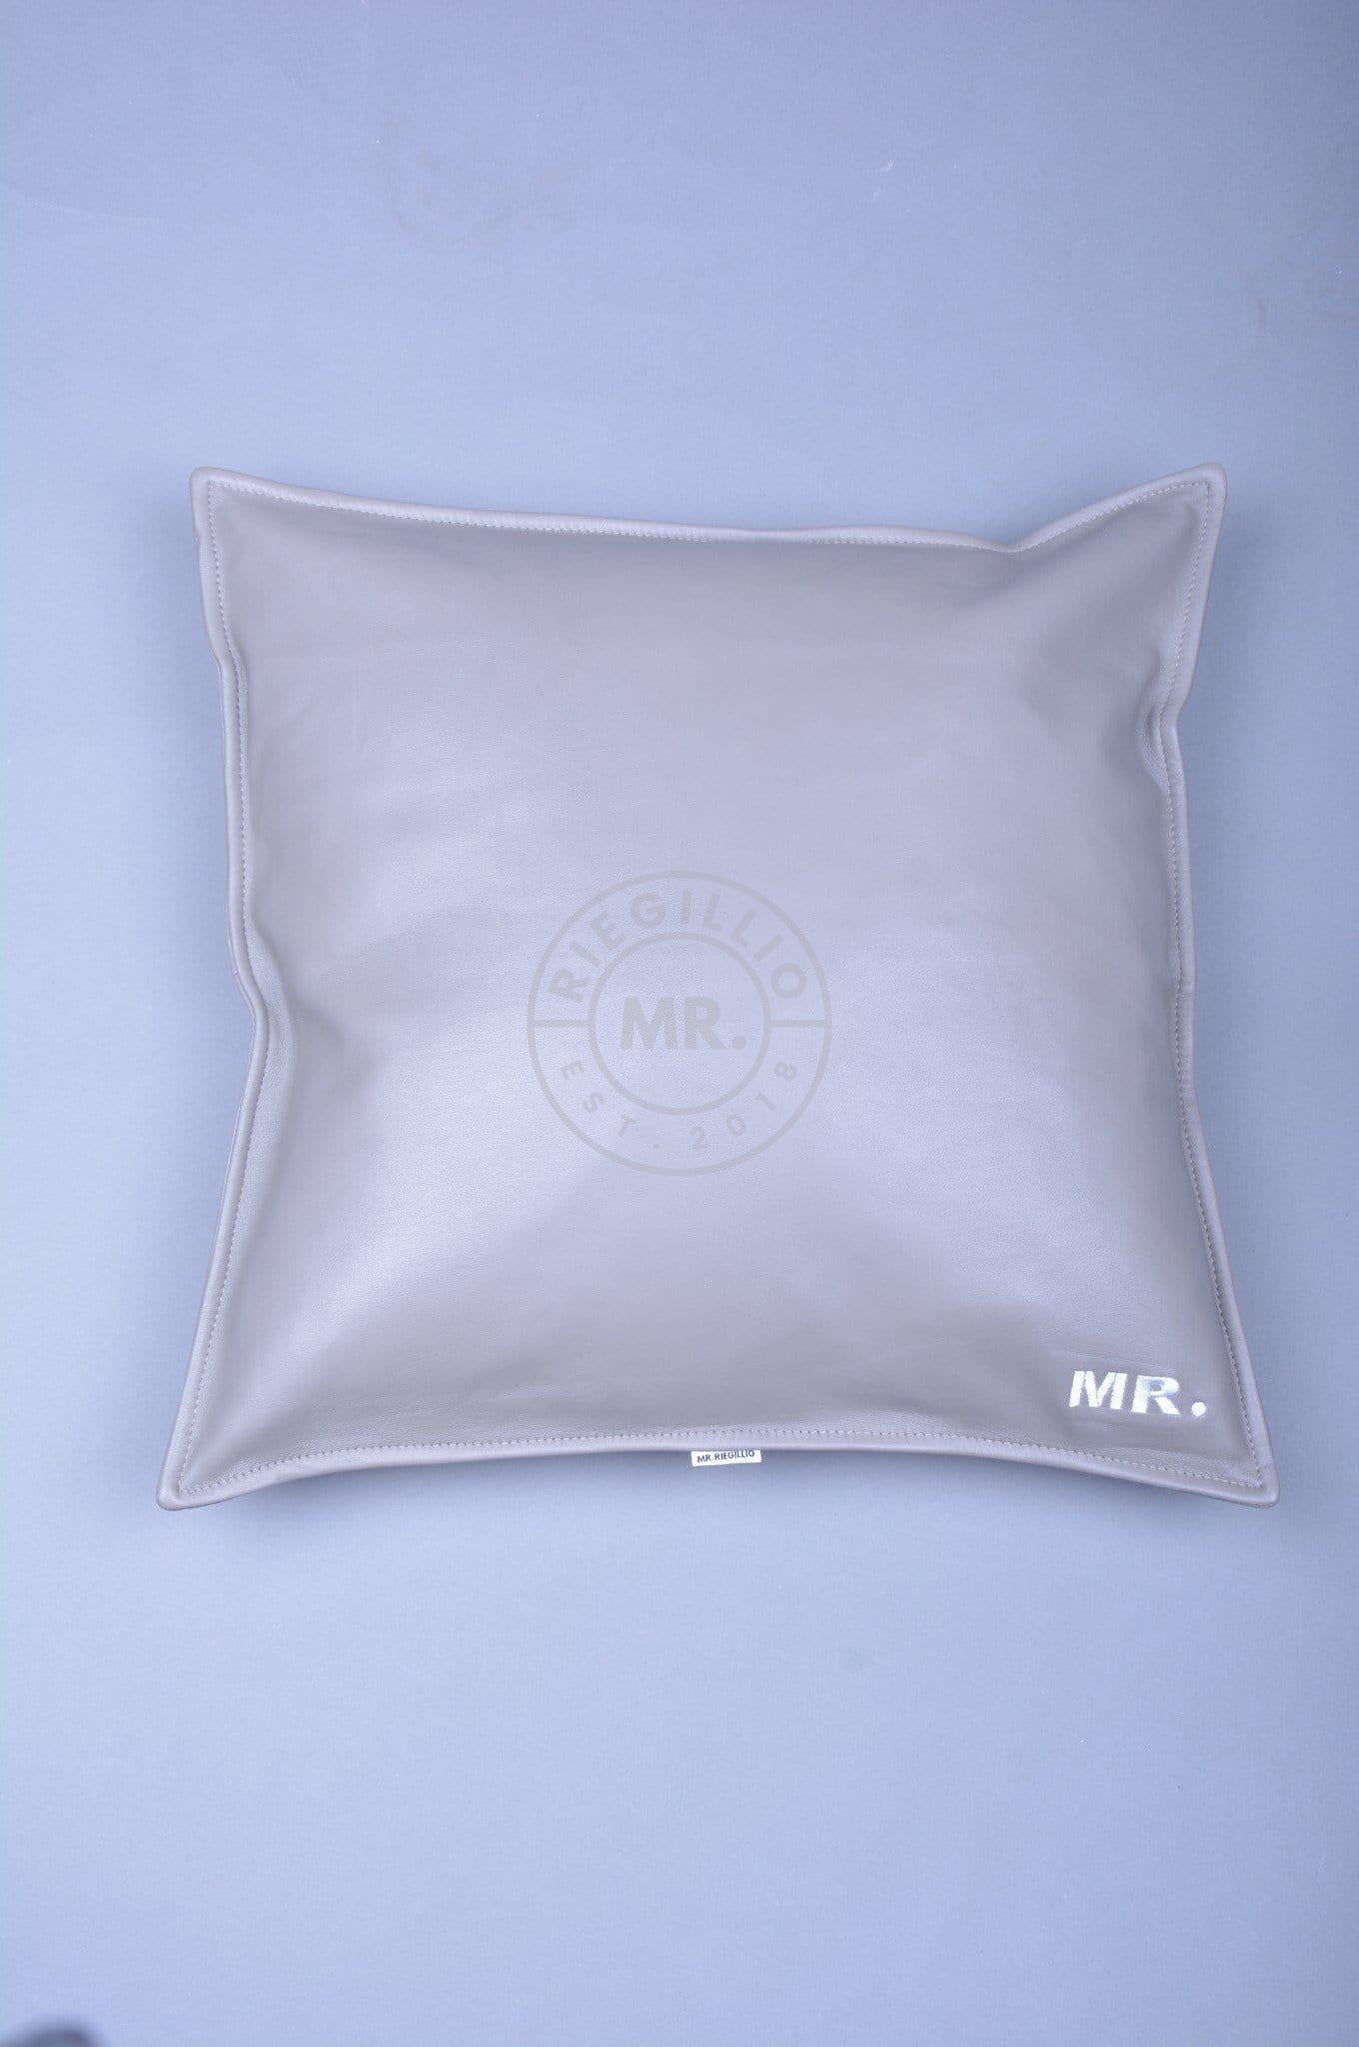 Grey Leather Pillow-at MR. Riegillio